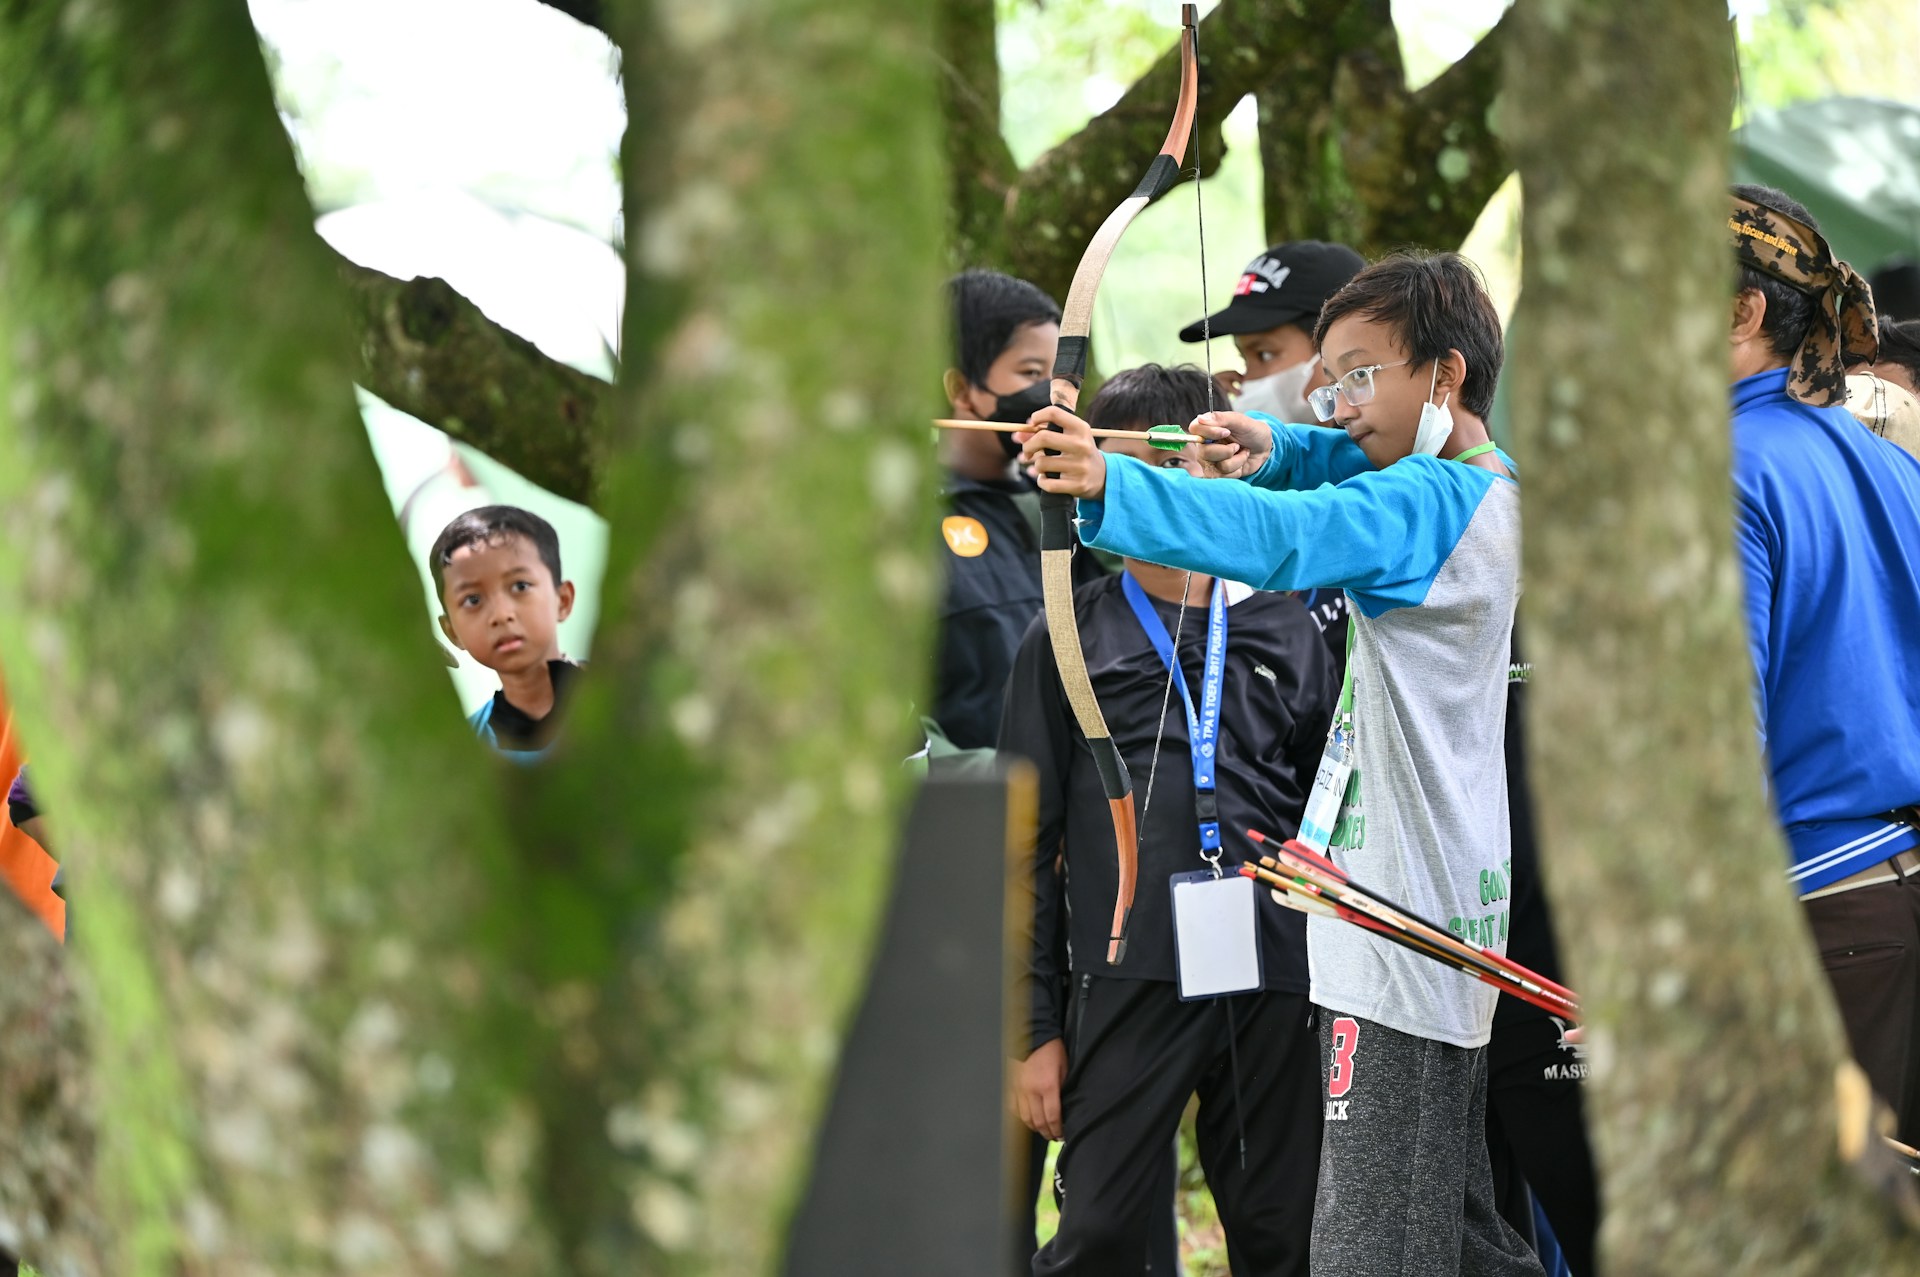 Archery camping